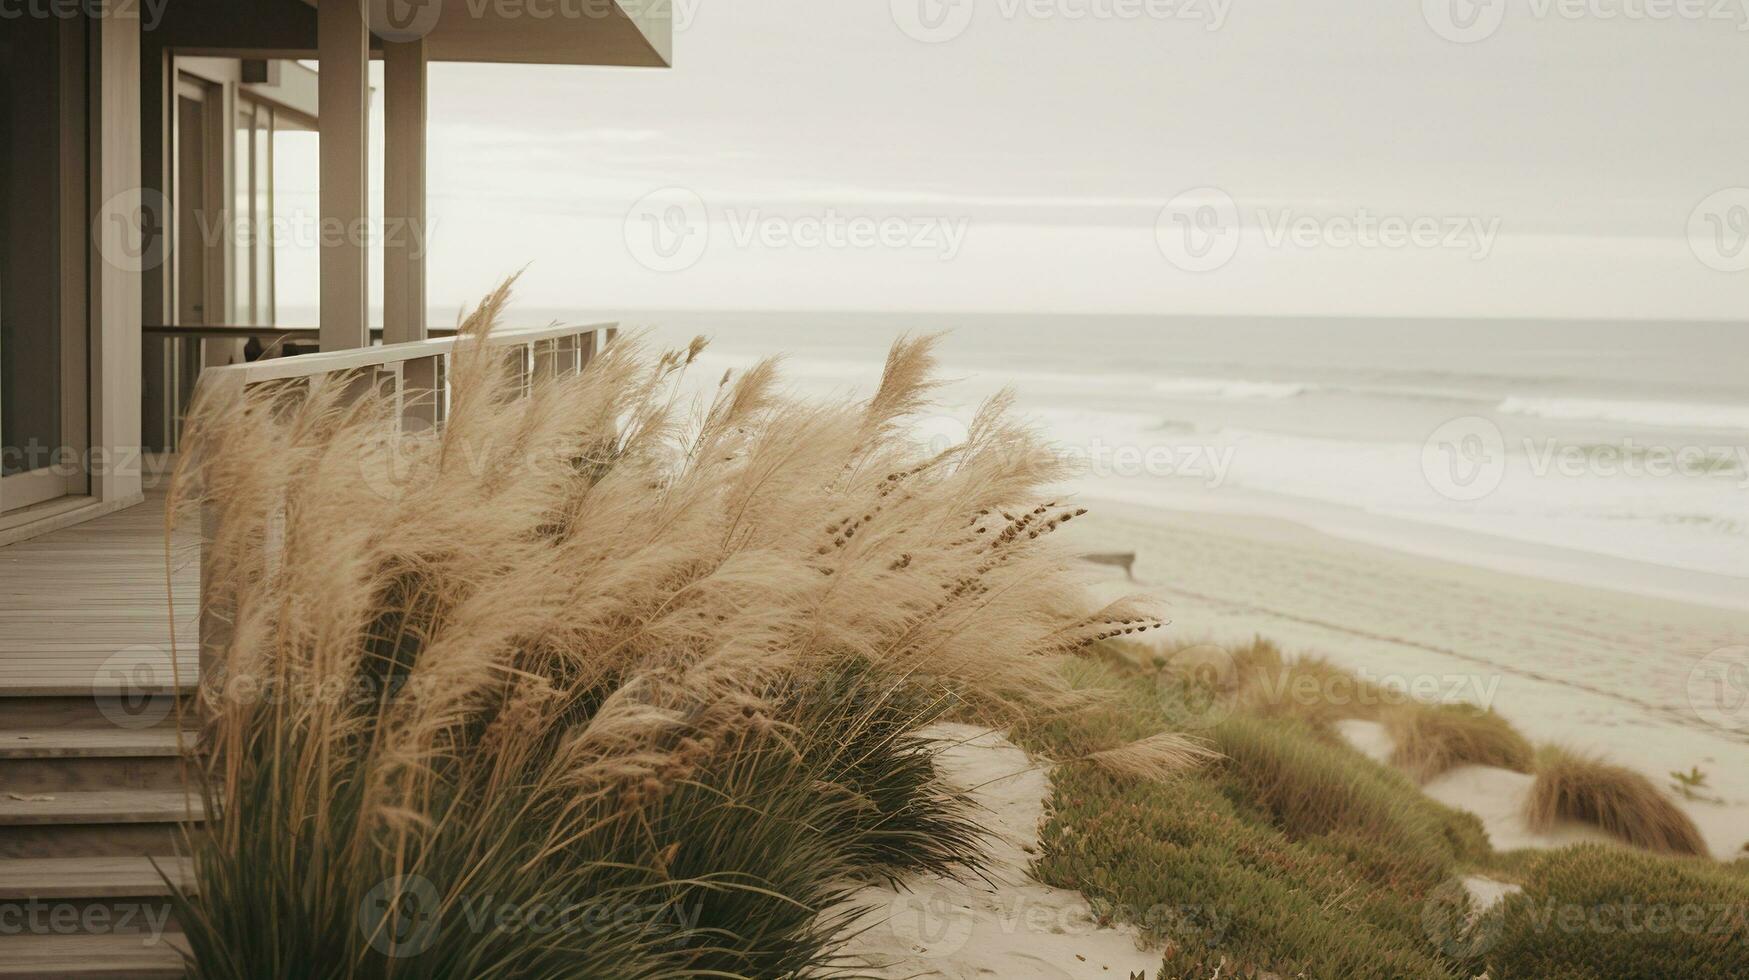 Generative AI, Beach aesthetic villa house and coast landscape, muted colors, minimalism photo